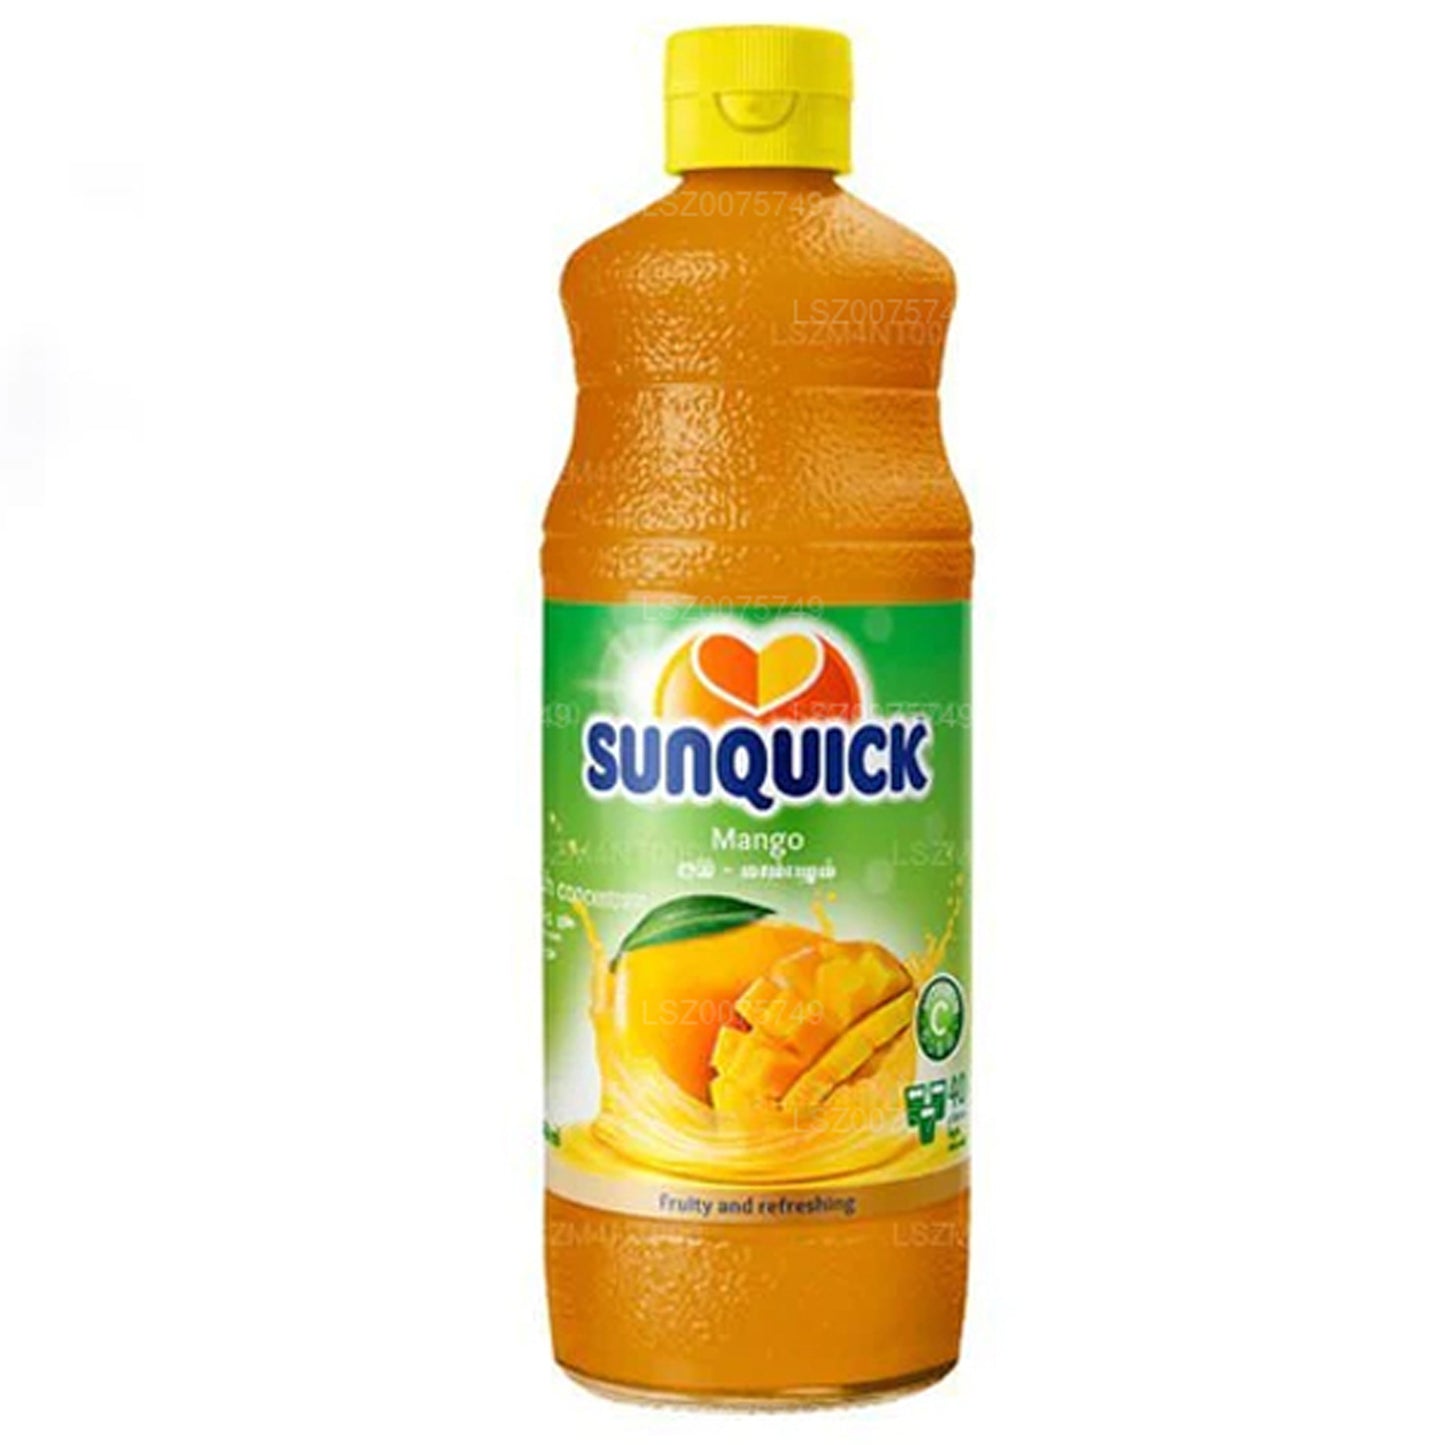 Sunquick Mango (840ml)